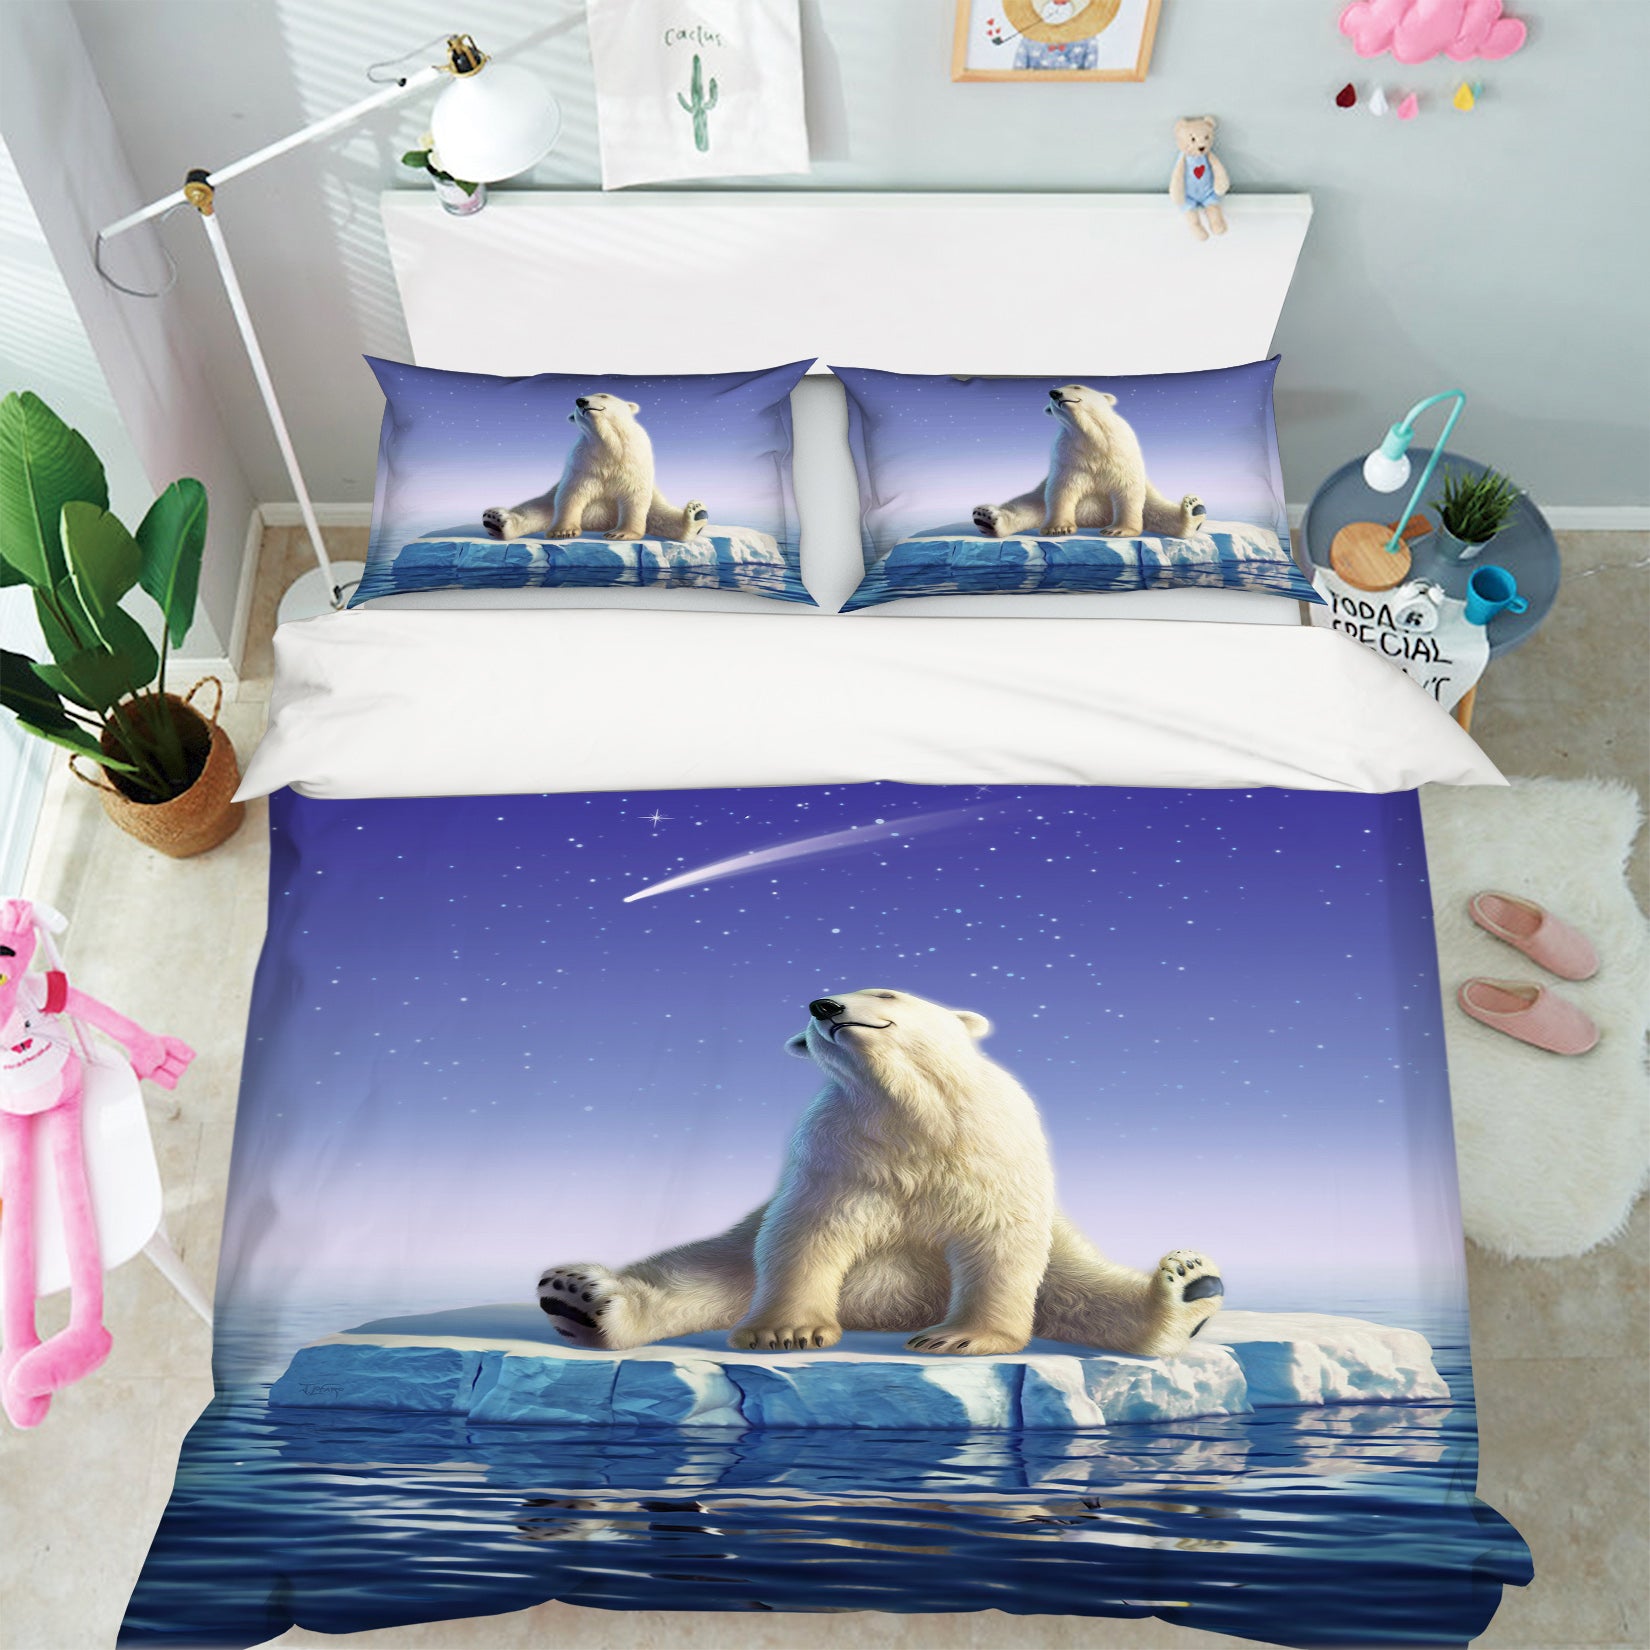 3D Polar Bear 86043 Jerry LoFaro bedding Bed Pillowcases Quilt